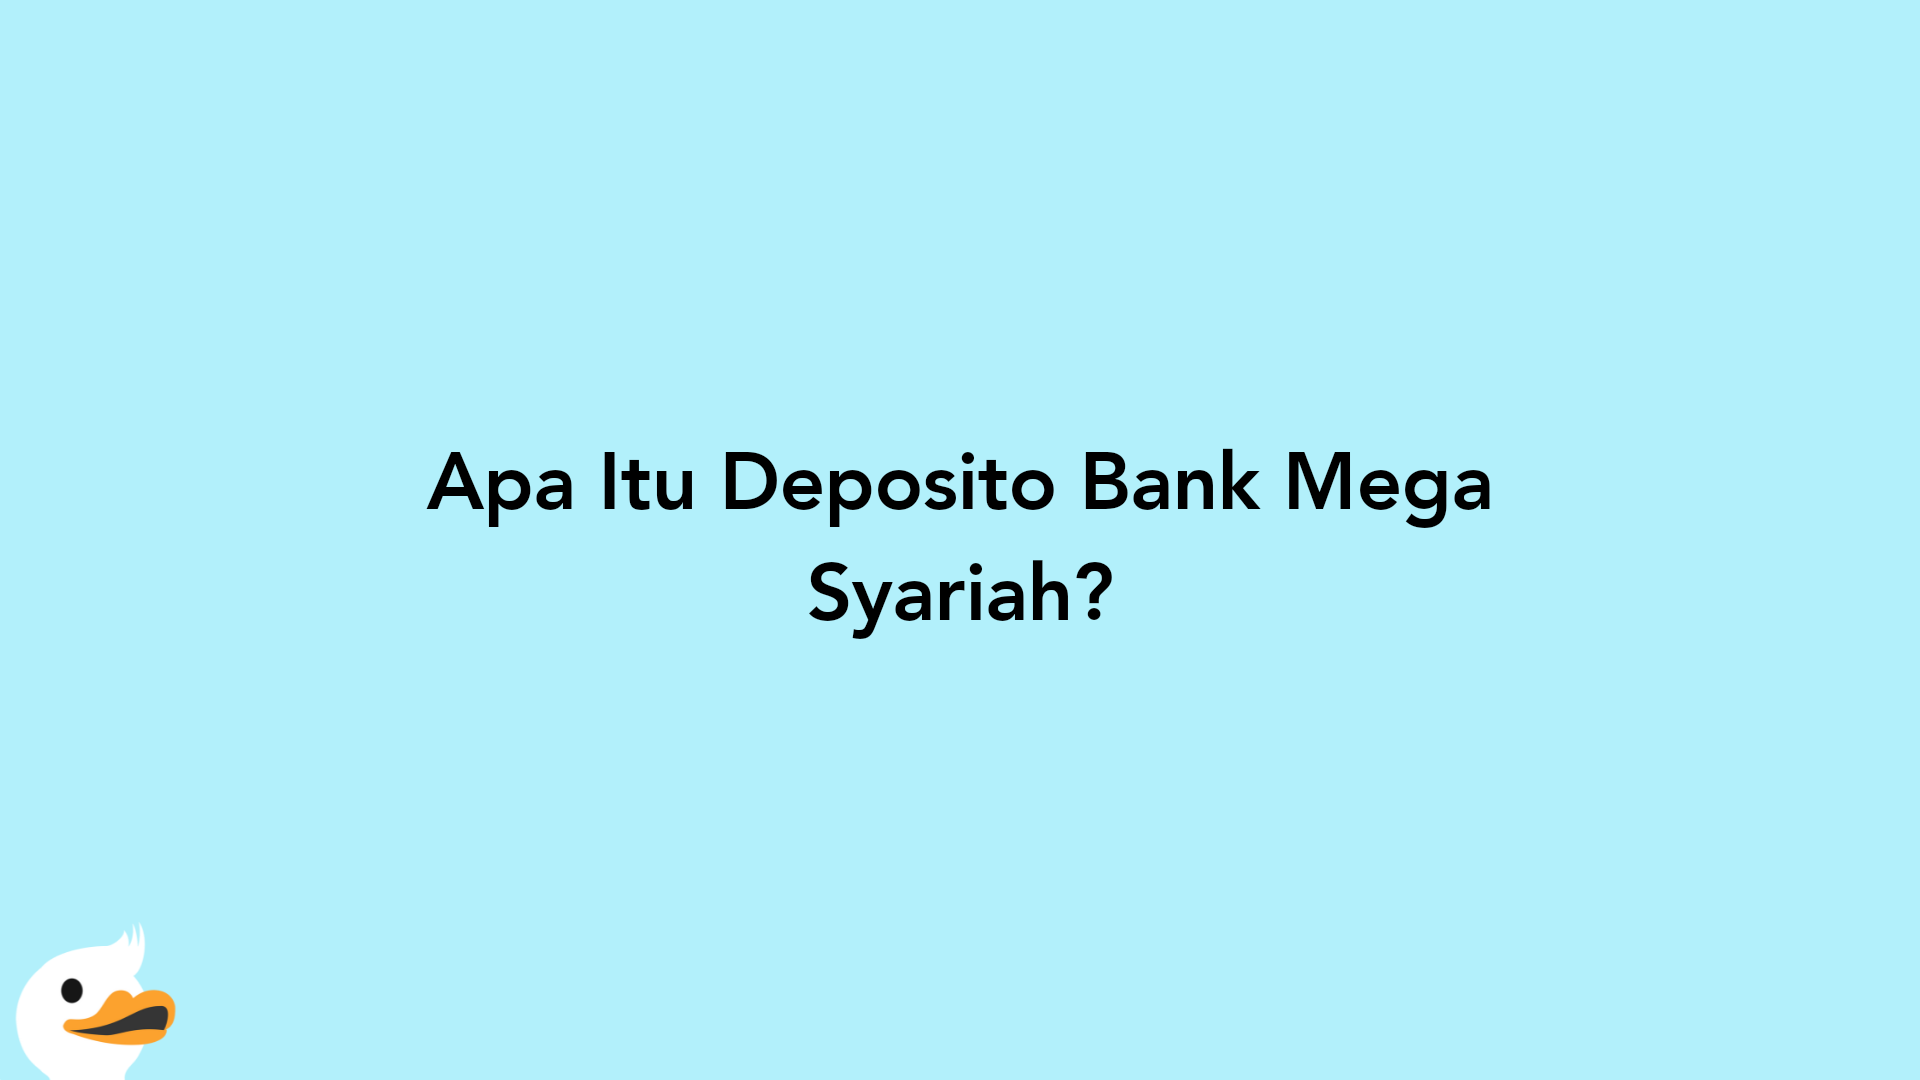 Apa Itu Deposito Bank Mega Syariah?